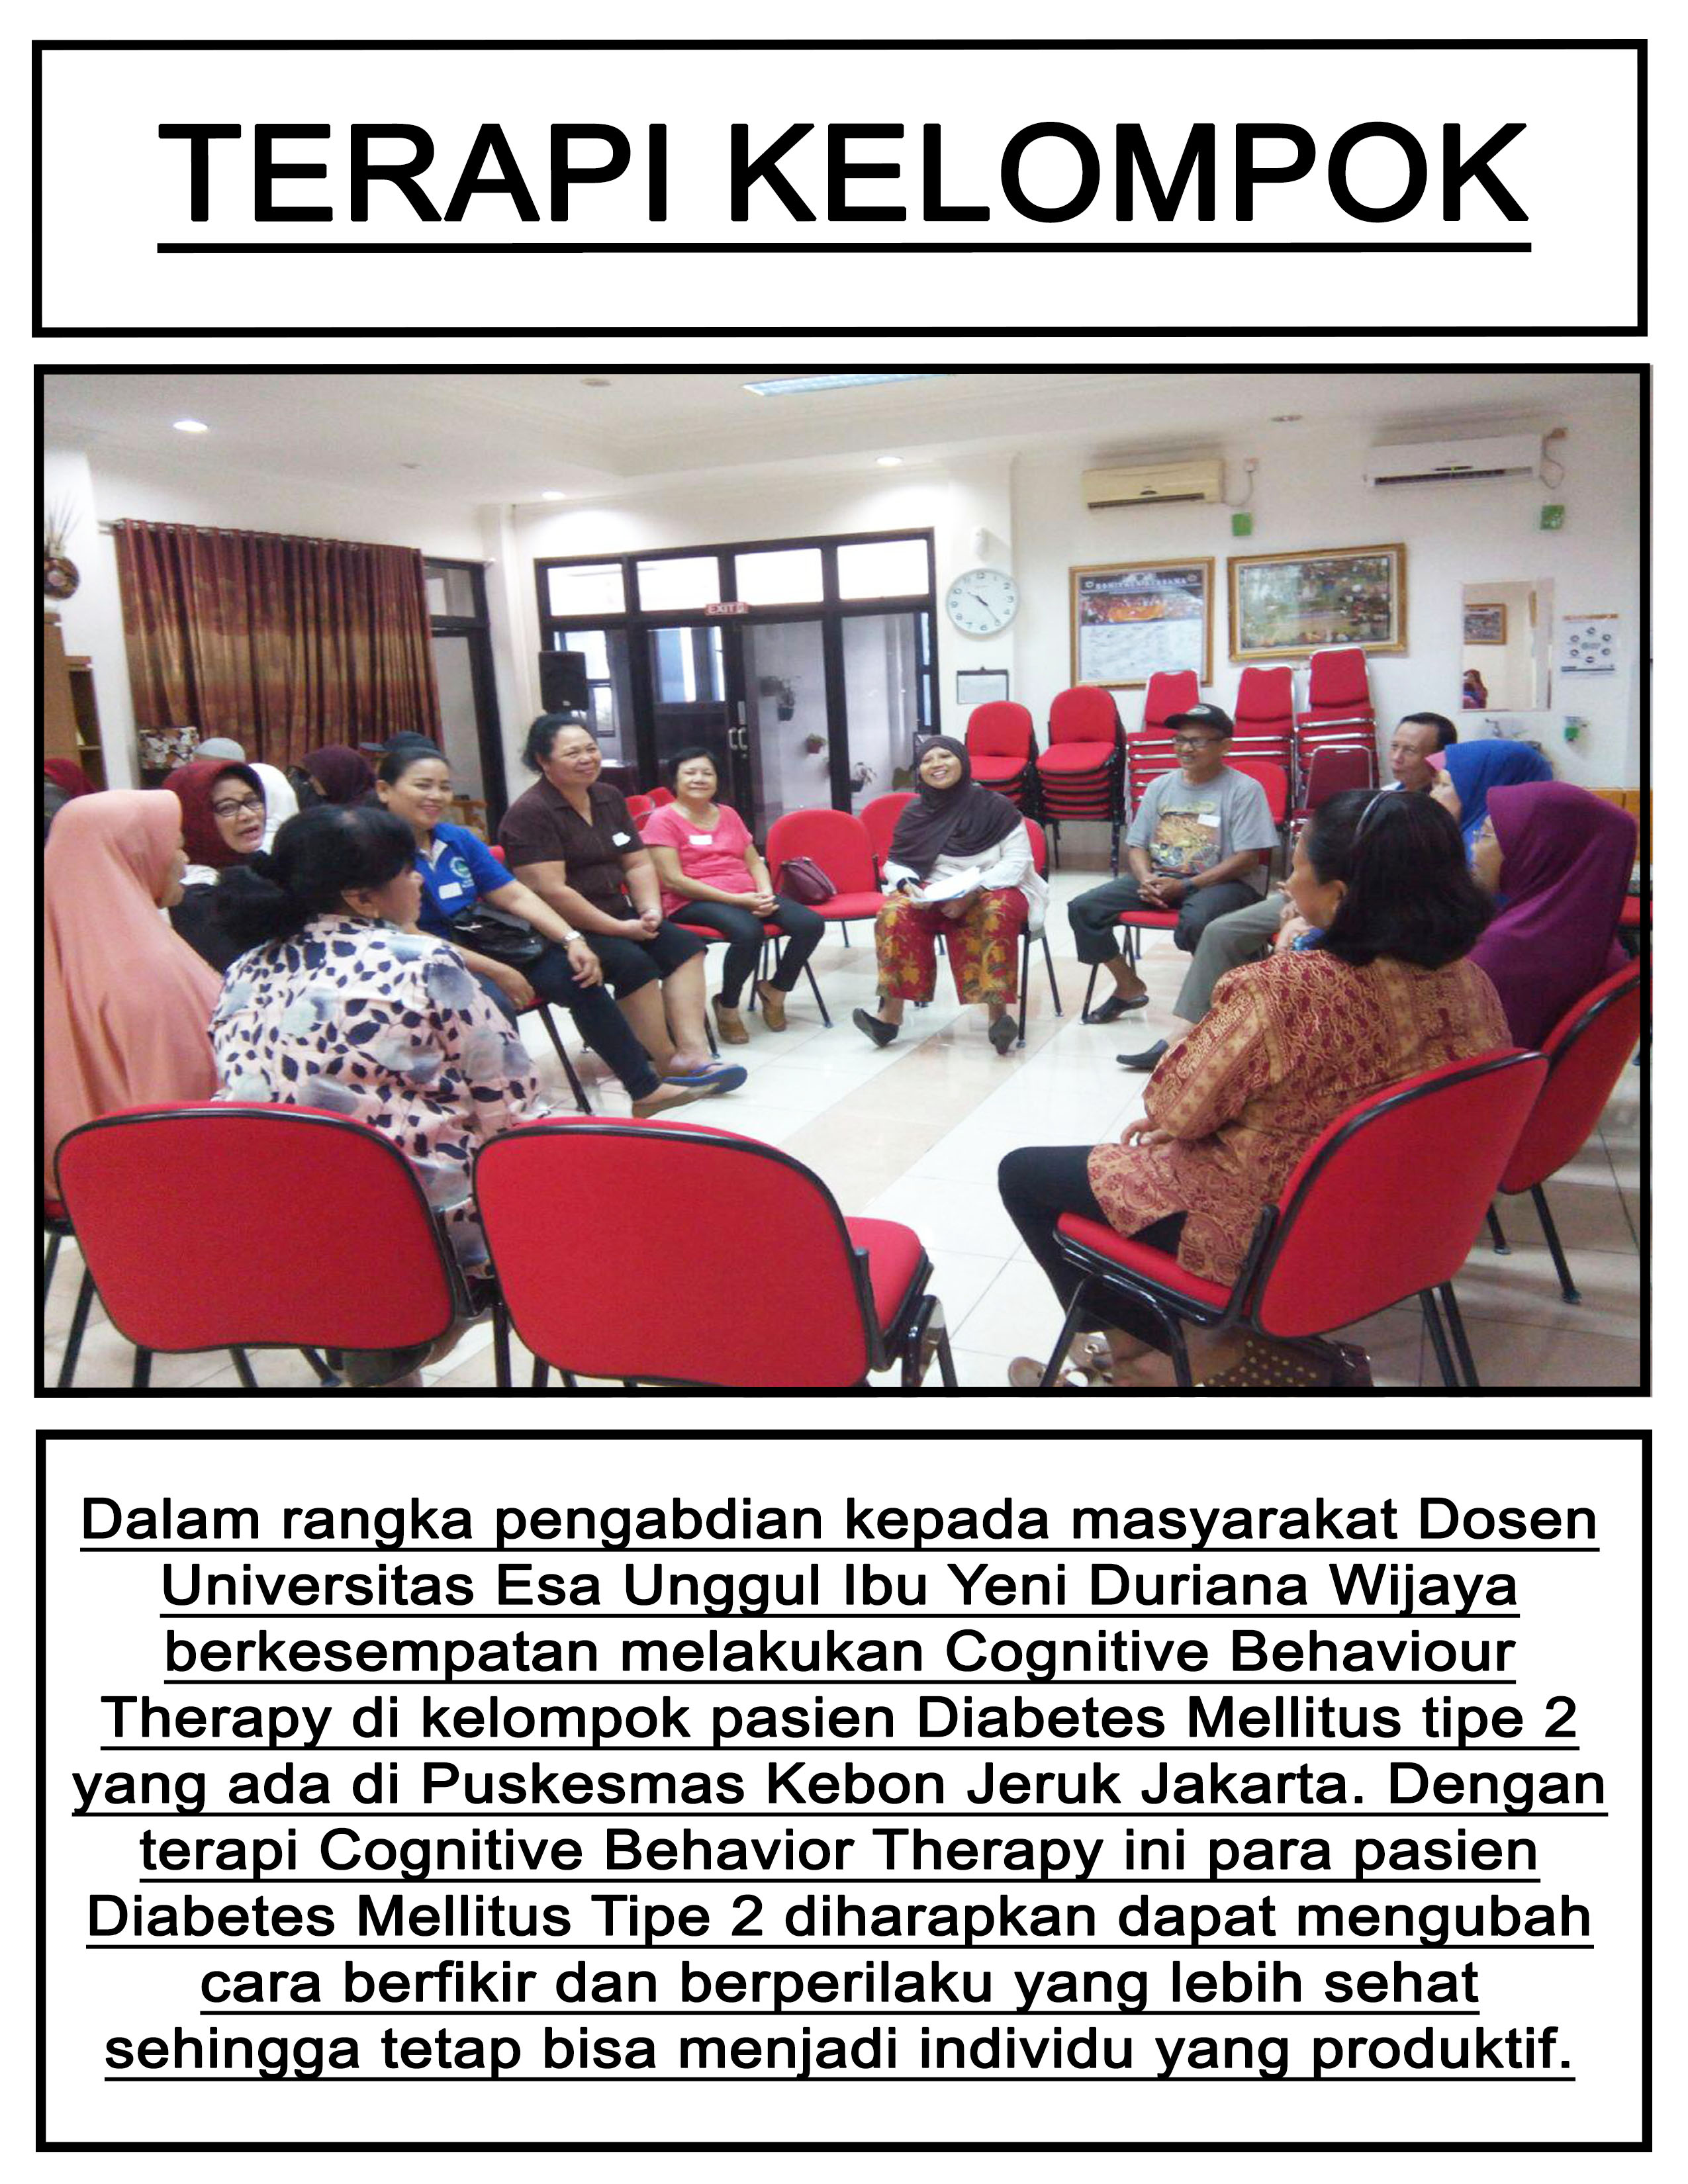 Kegiatan Pengabdian Masyarakat oleh Dosen Psikologi Universitas Esa Unggul di Puskesmas Kebon Jeruk, Jakarta Barat